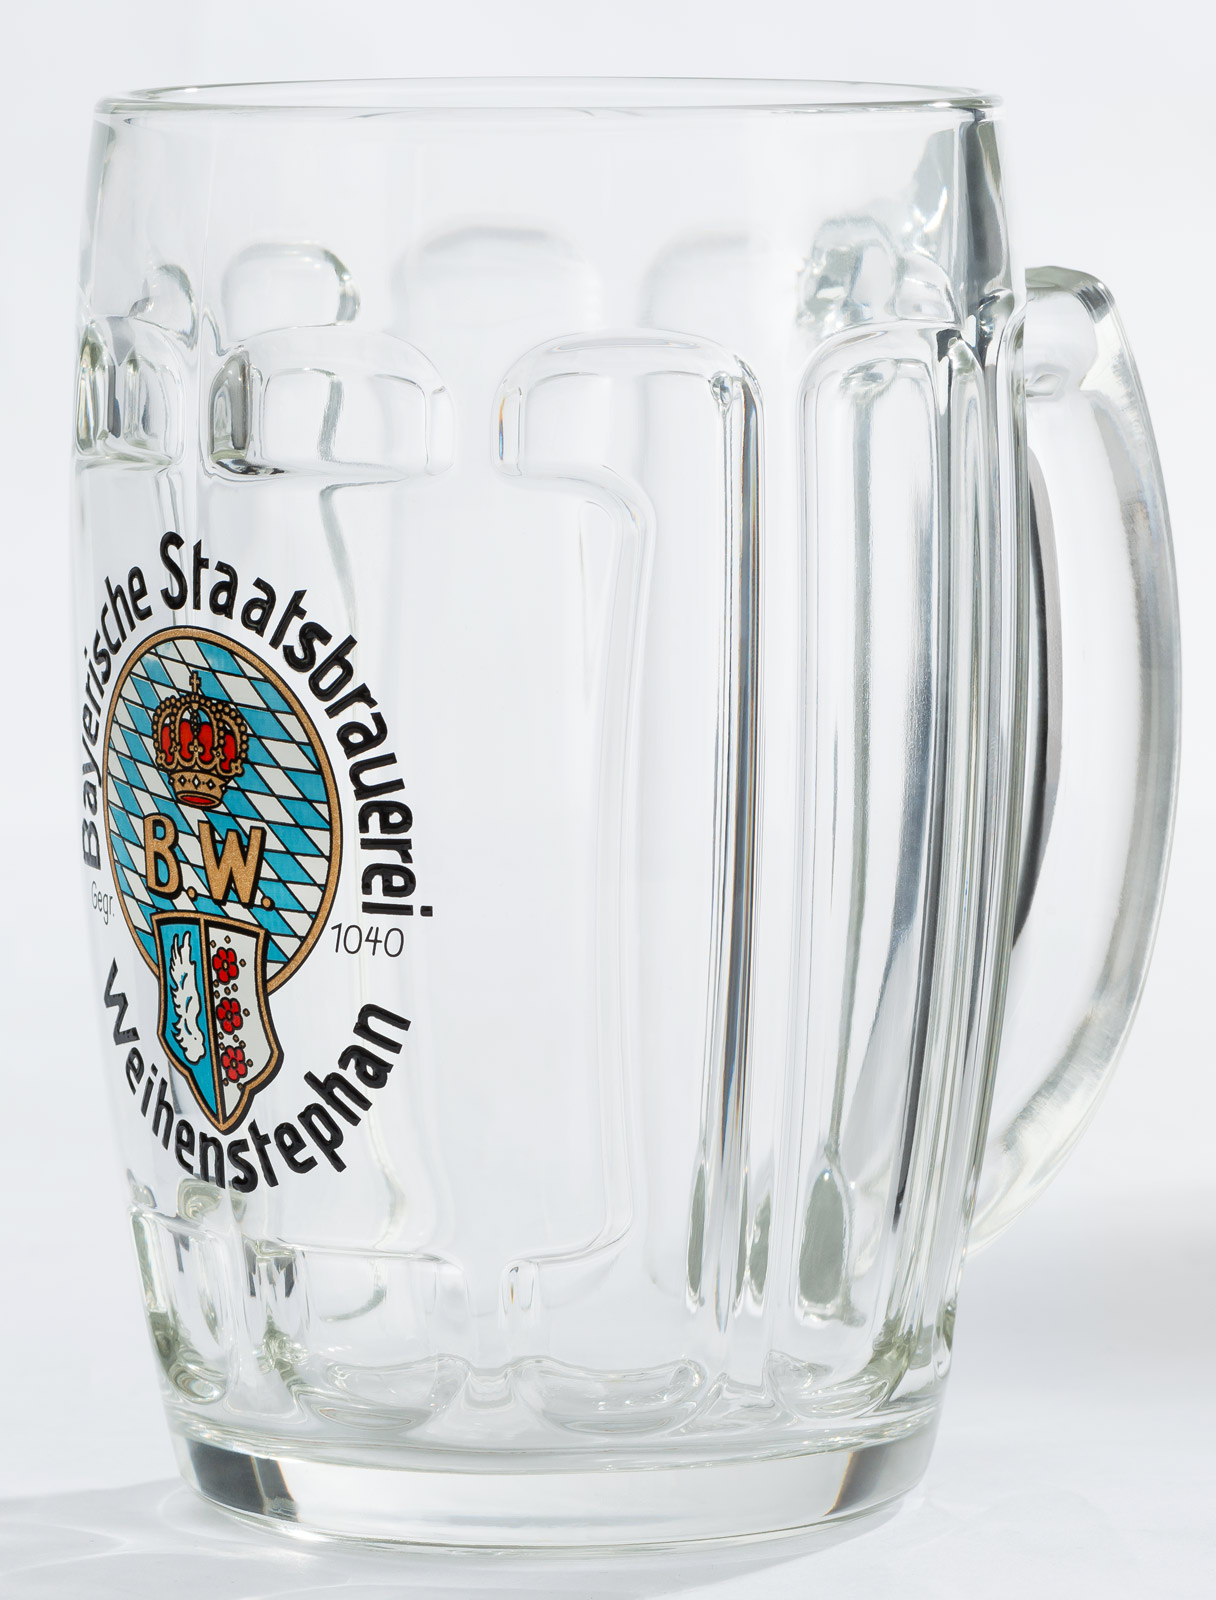 Weihenstephaner Dimpled Beer Glass 1 Liter Stein Maßkrug BNWOB MAN CAVE GERMANY 